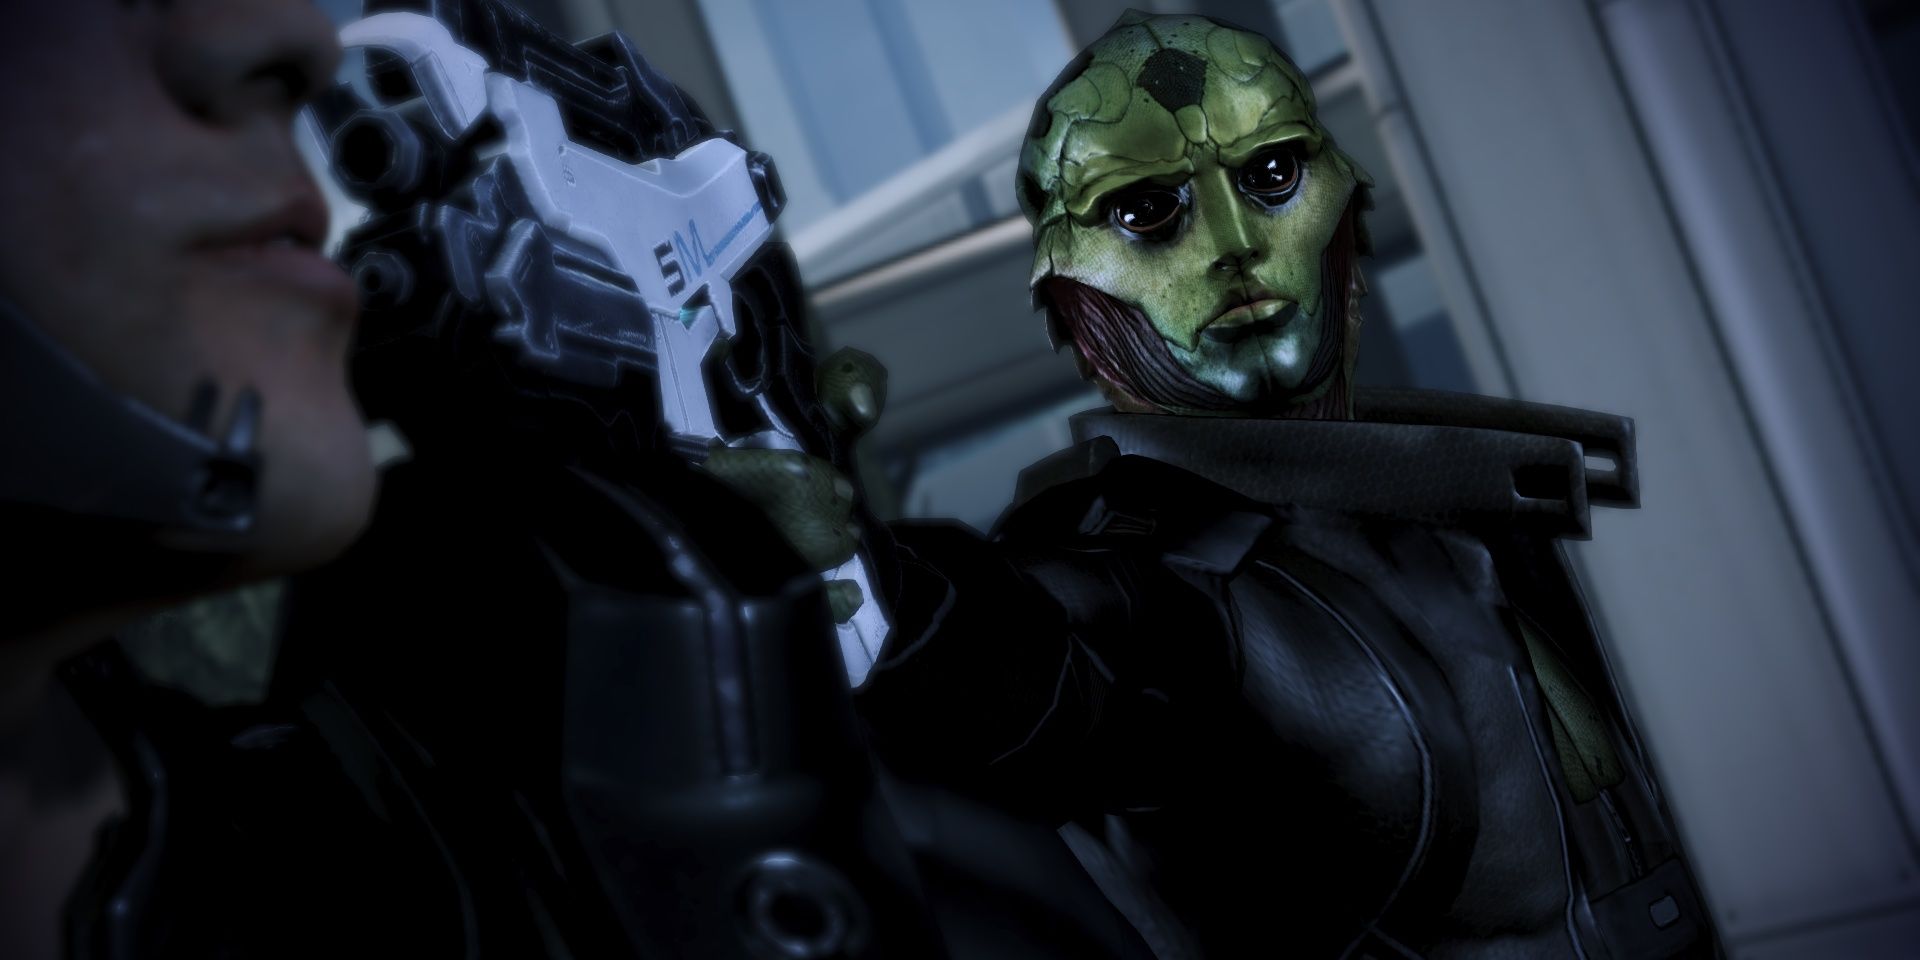 Thane in Mass Effect